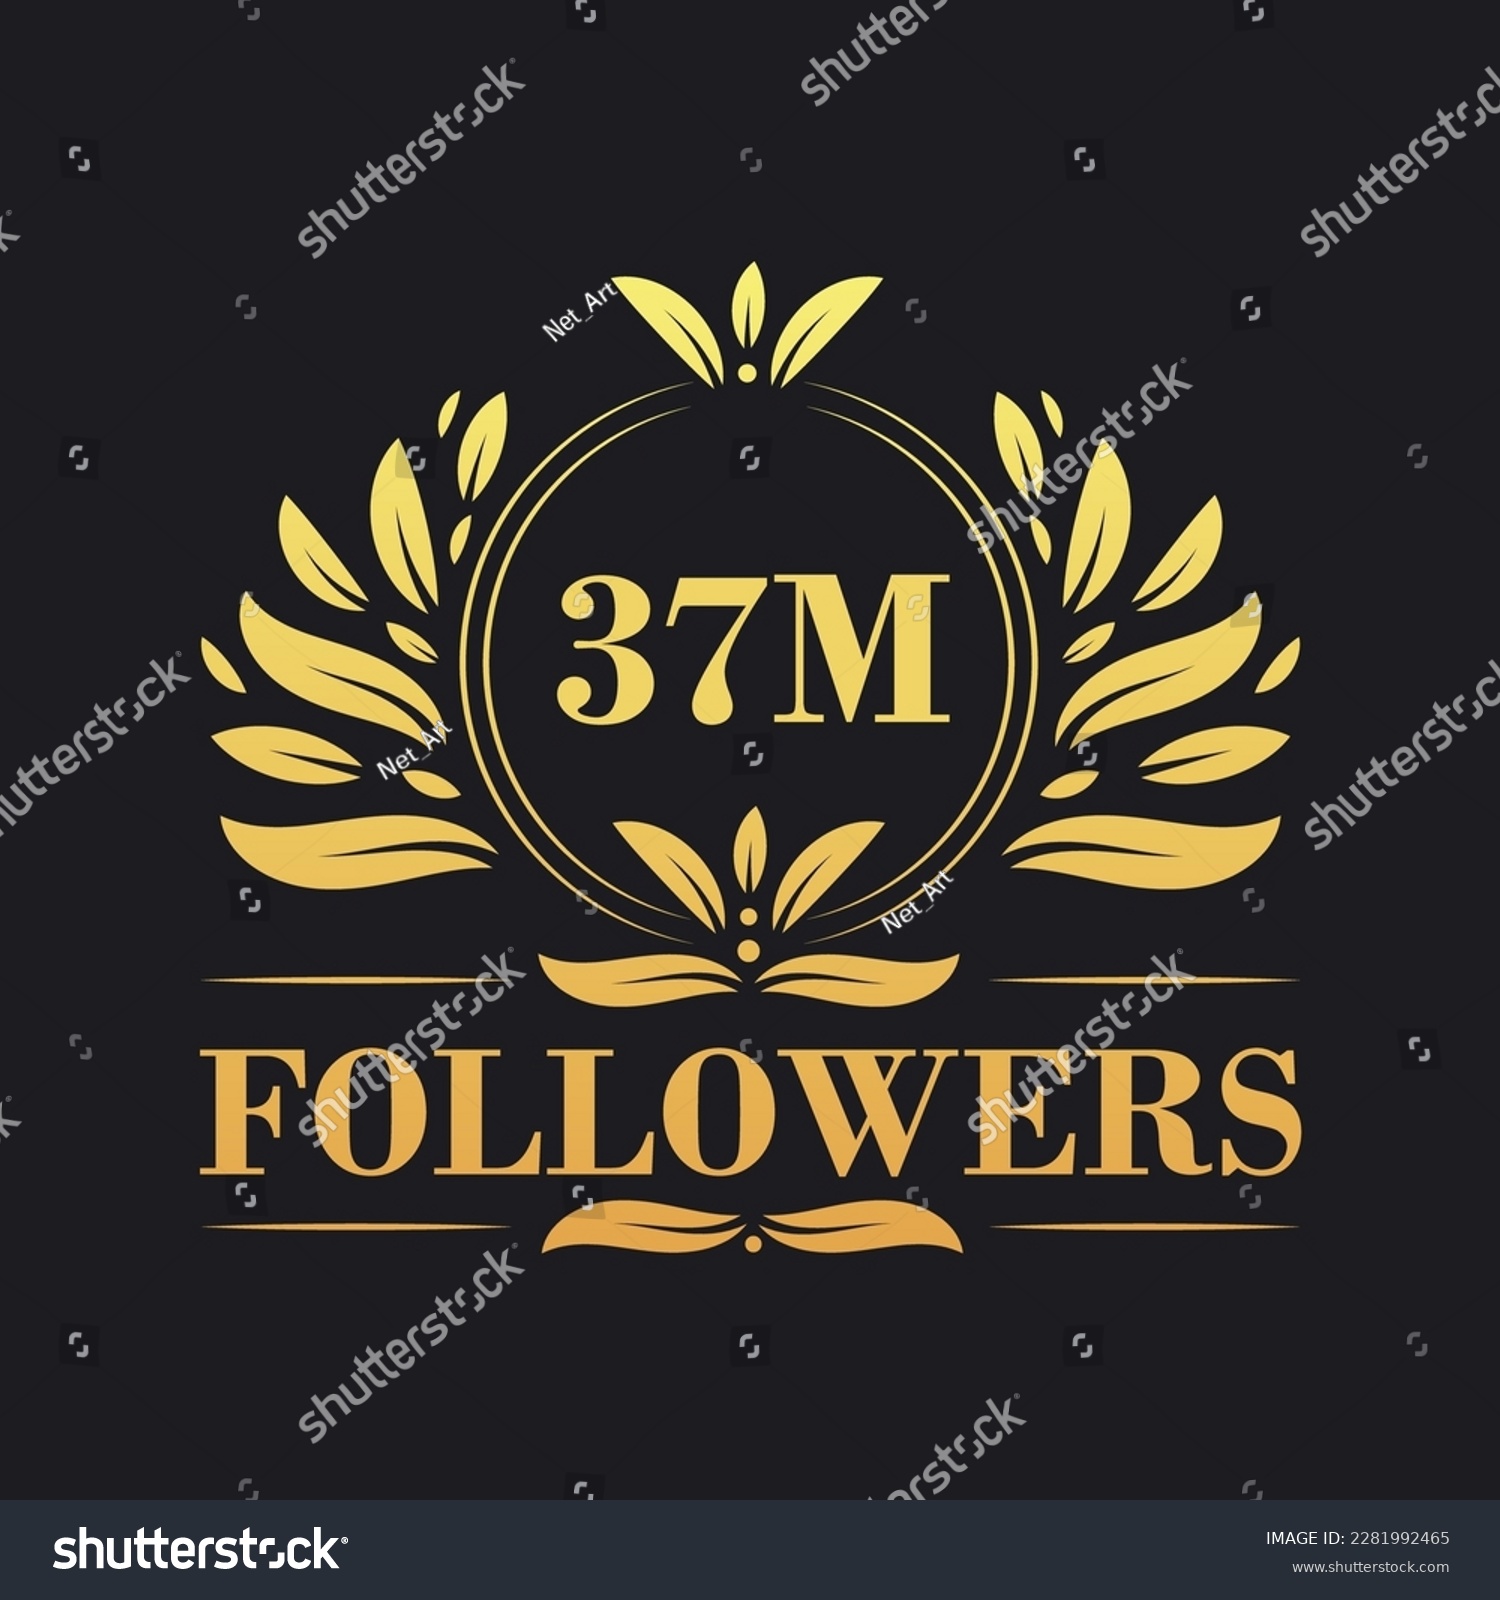 SVG of 37M Followers celebration design. Luxurious 37M Followers logo for social media followers svg